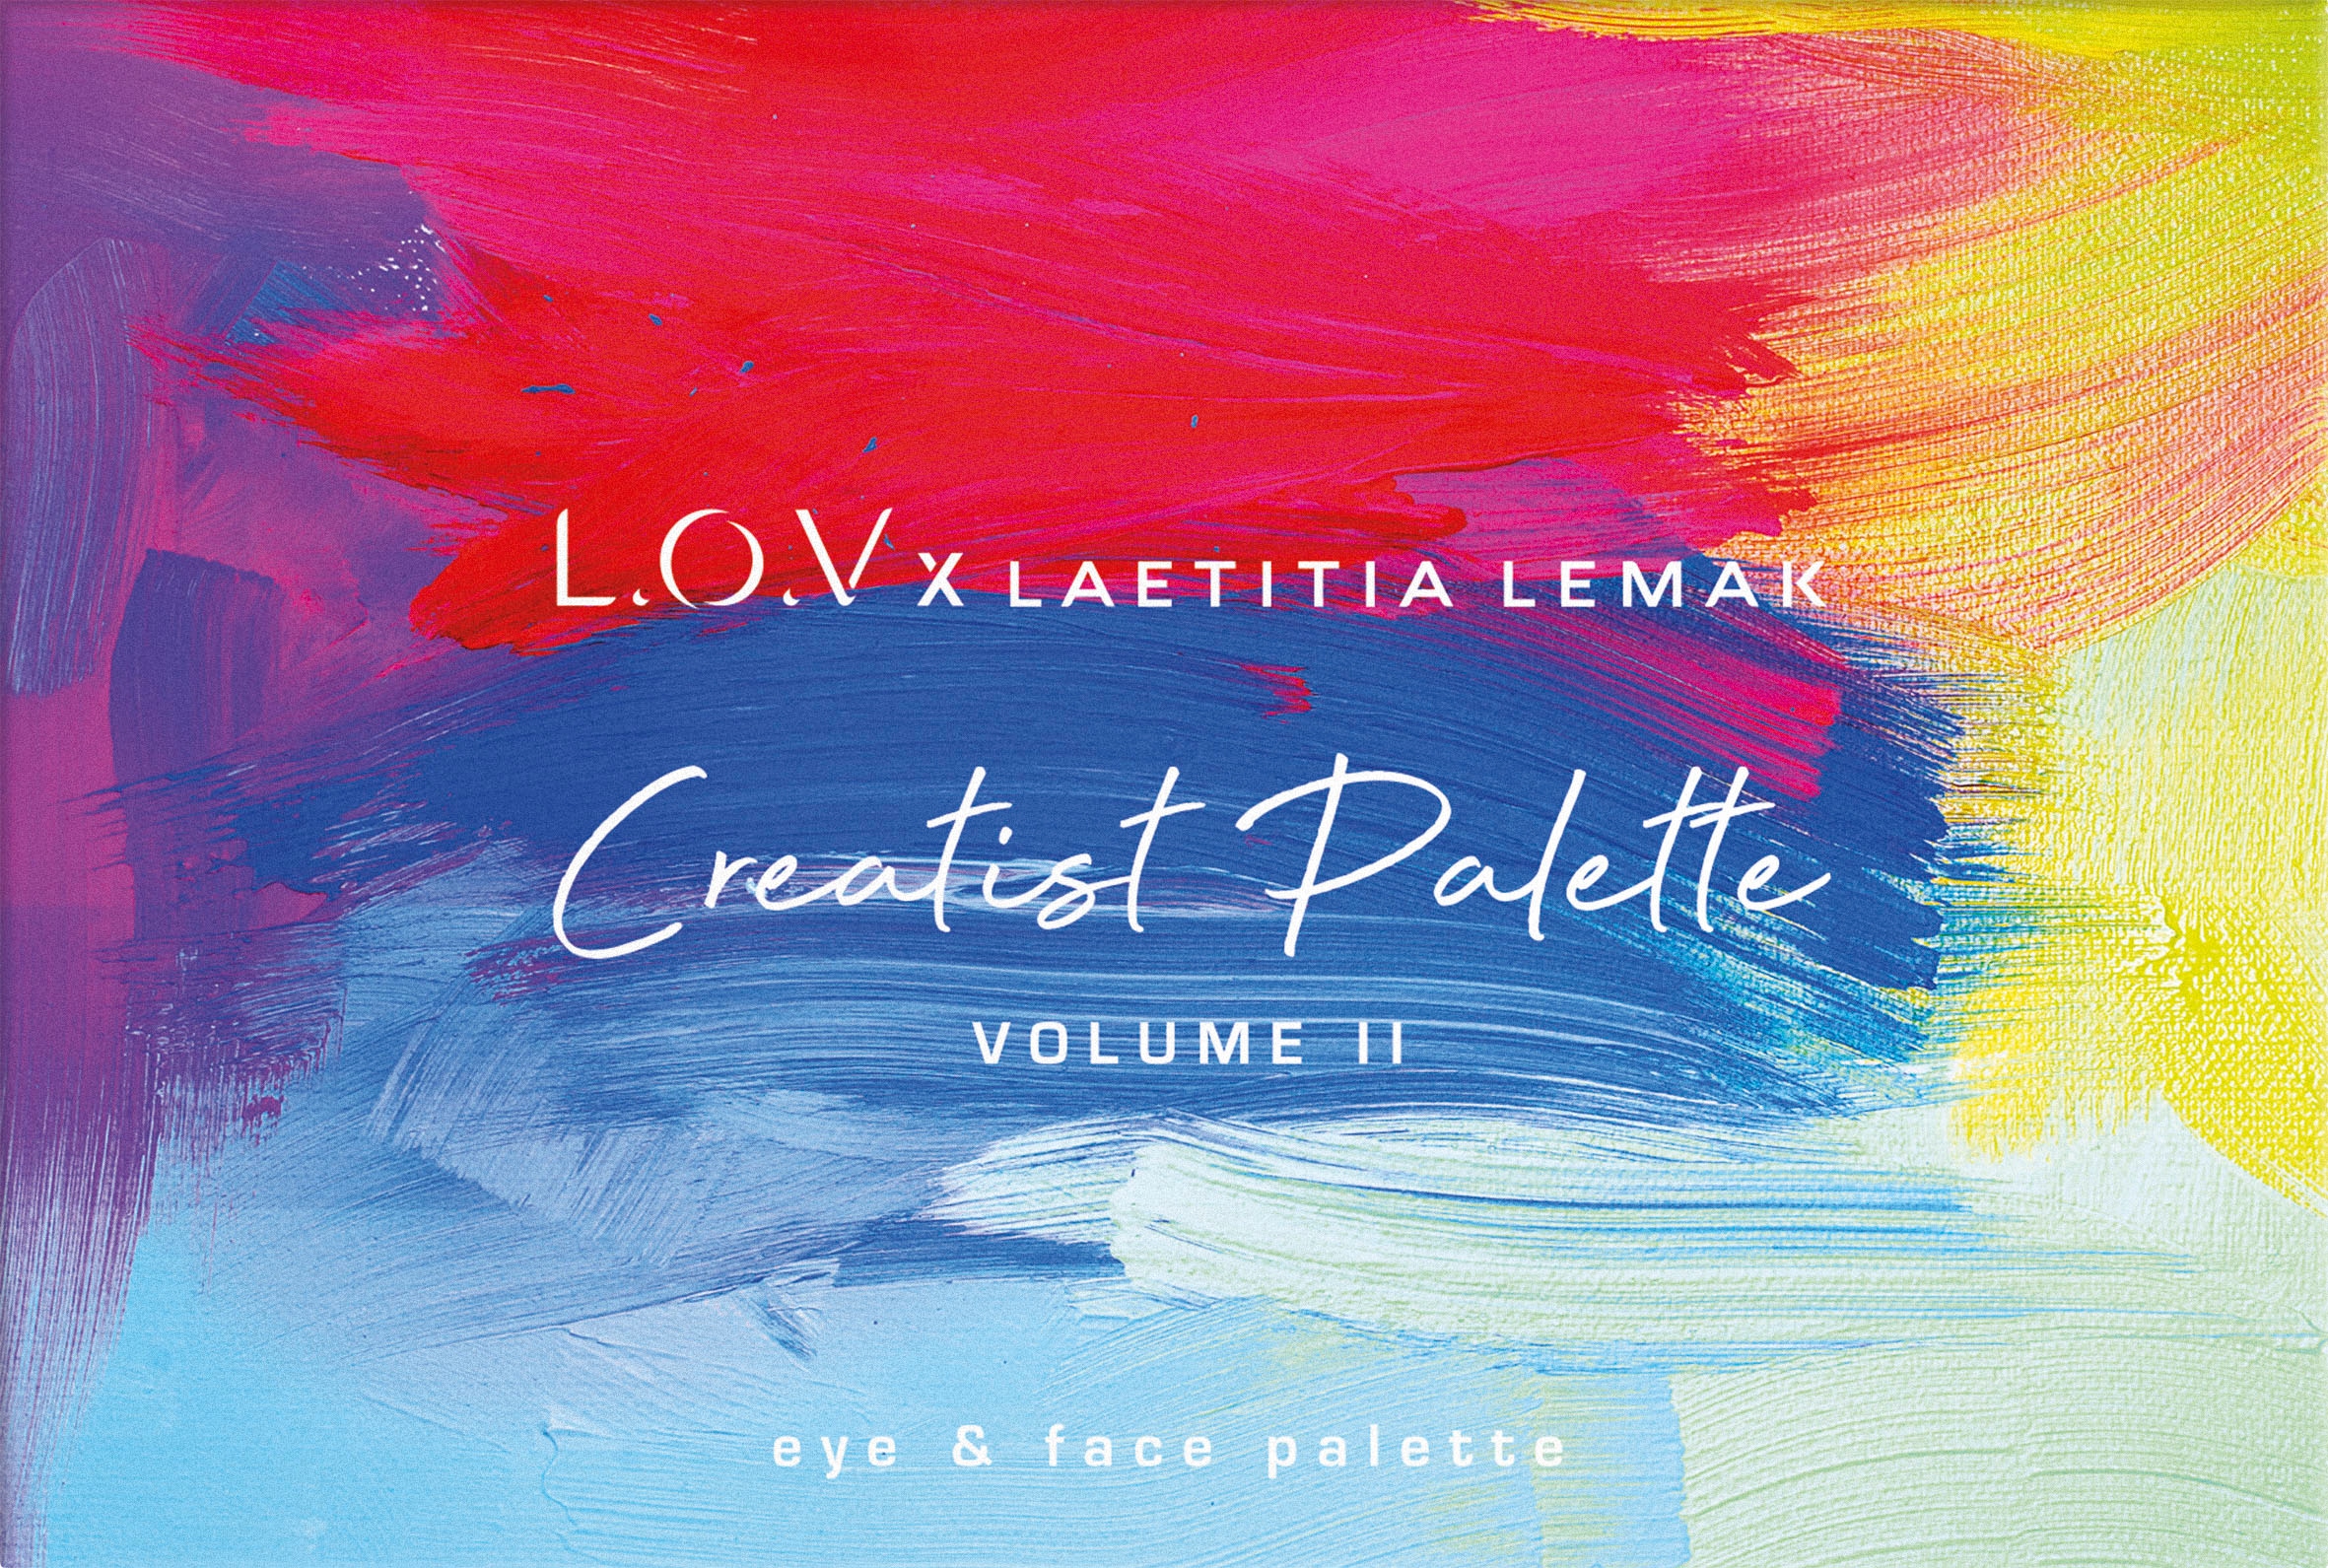 L.O.V Lidschatten-Palette »L.O.V x LAETITIA face online CREATIST kaufen II palette« & Volume LEMAK eye PALETTE